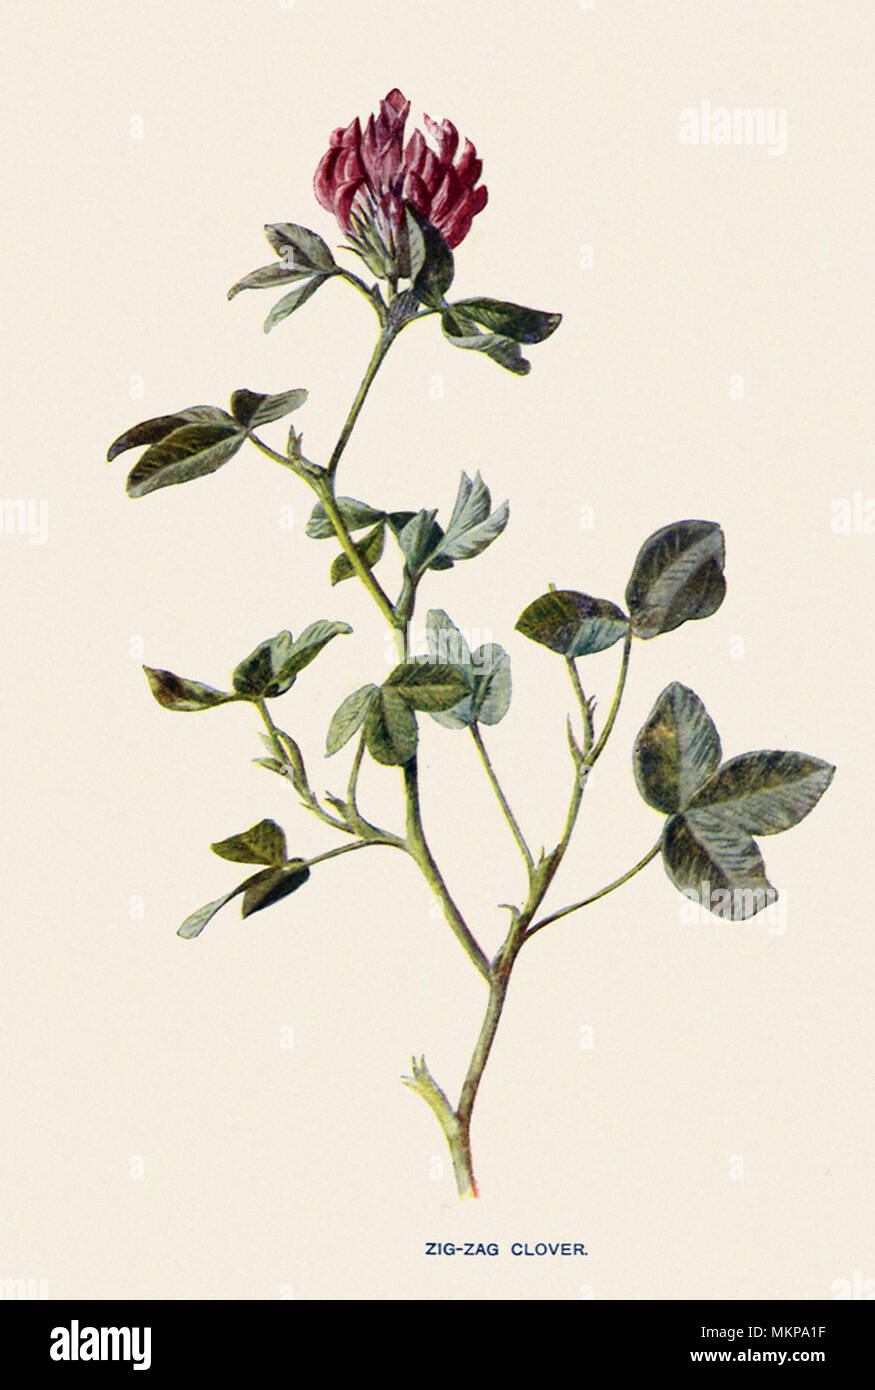 Zig-Zag Clover, Trifolium medium Stock Photo